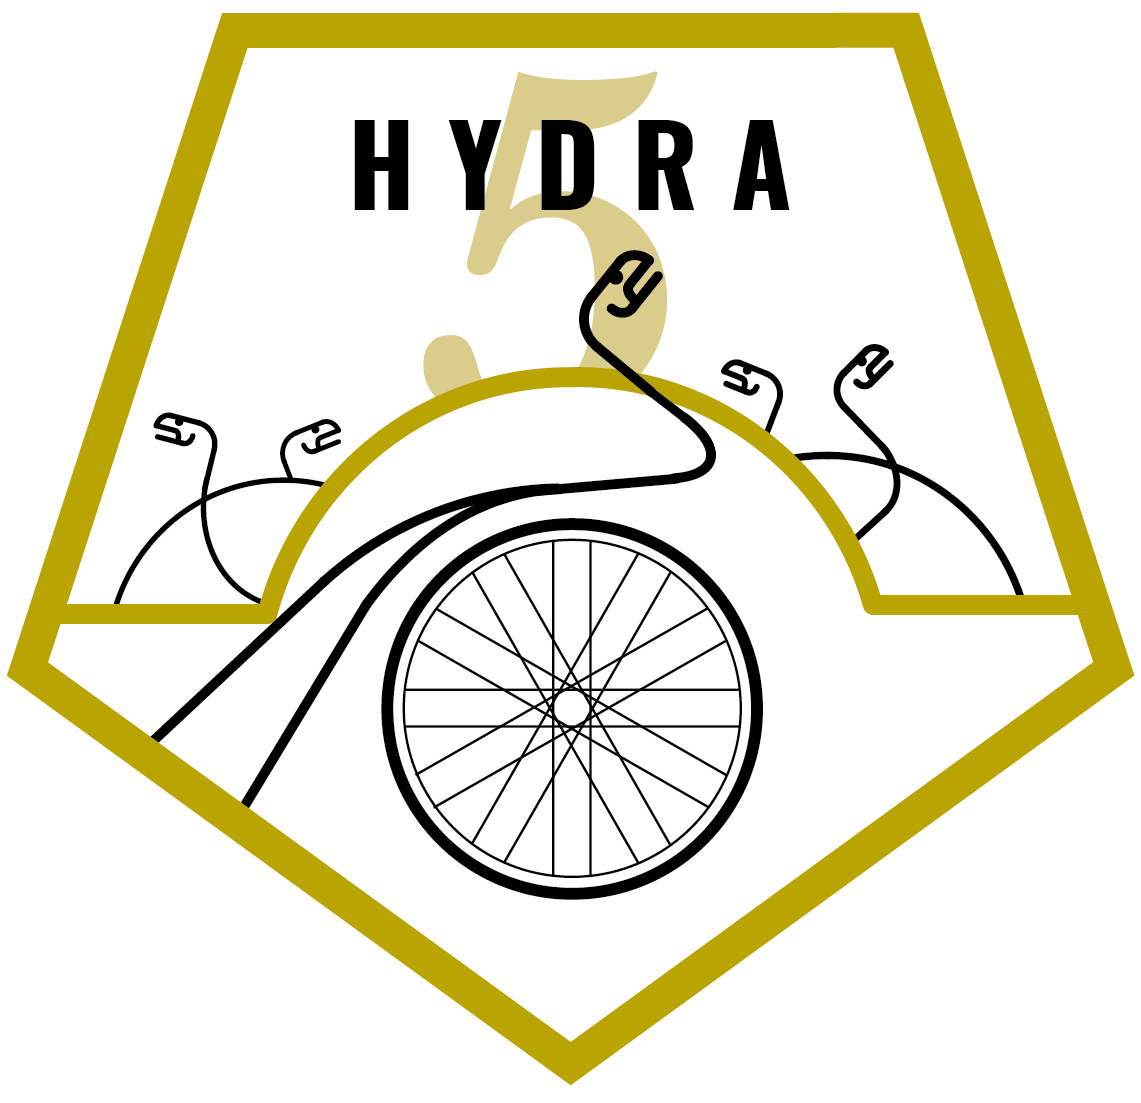 hydra-5-badge